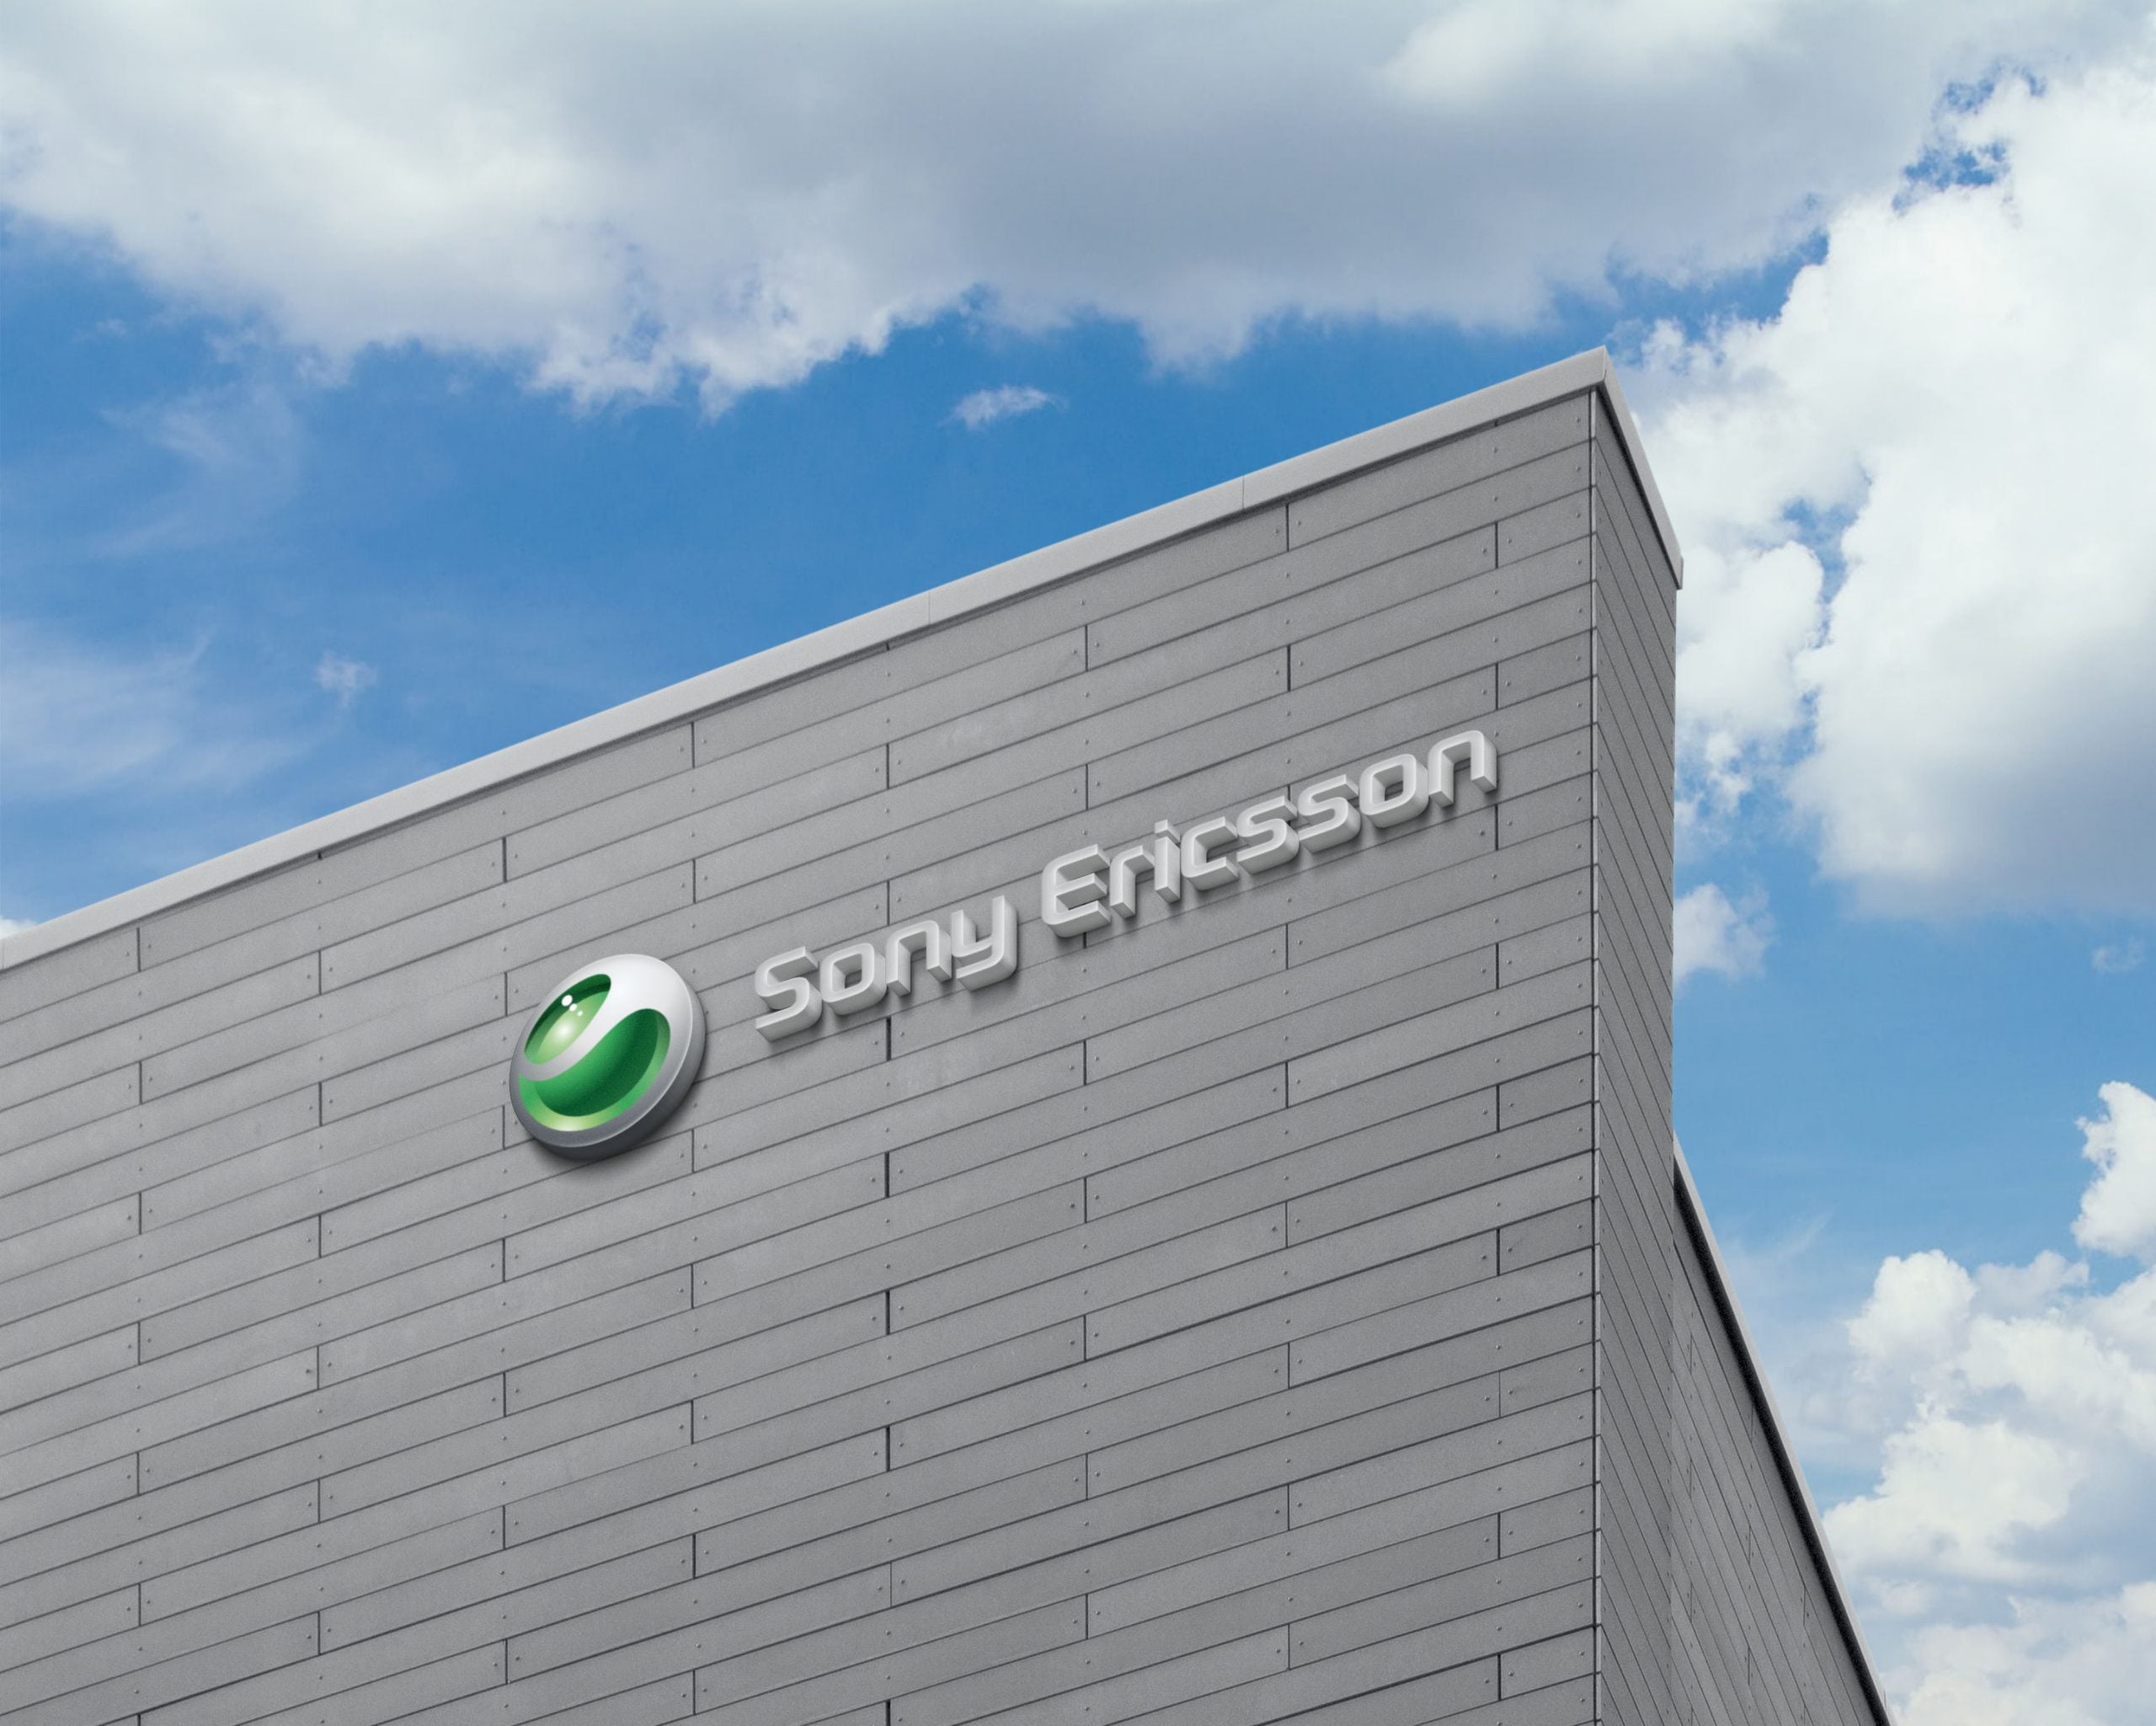 Sony Ericsson Logo 3D Logo Sign on Building Facade Wall Mock-Up